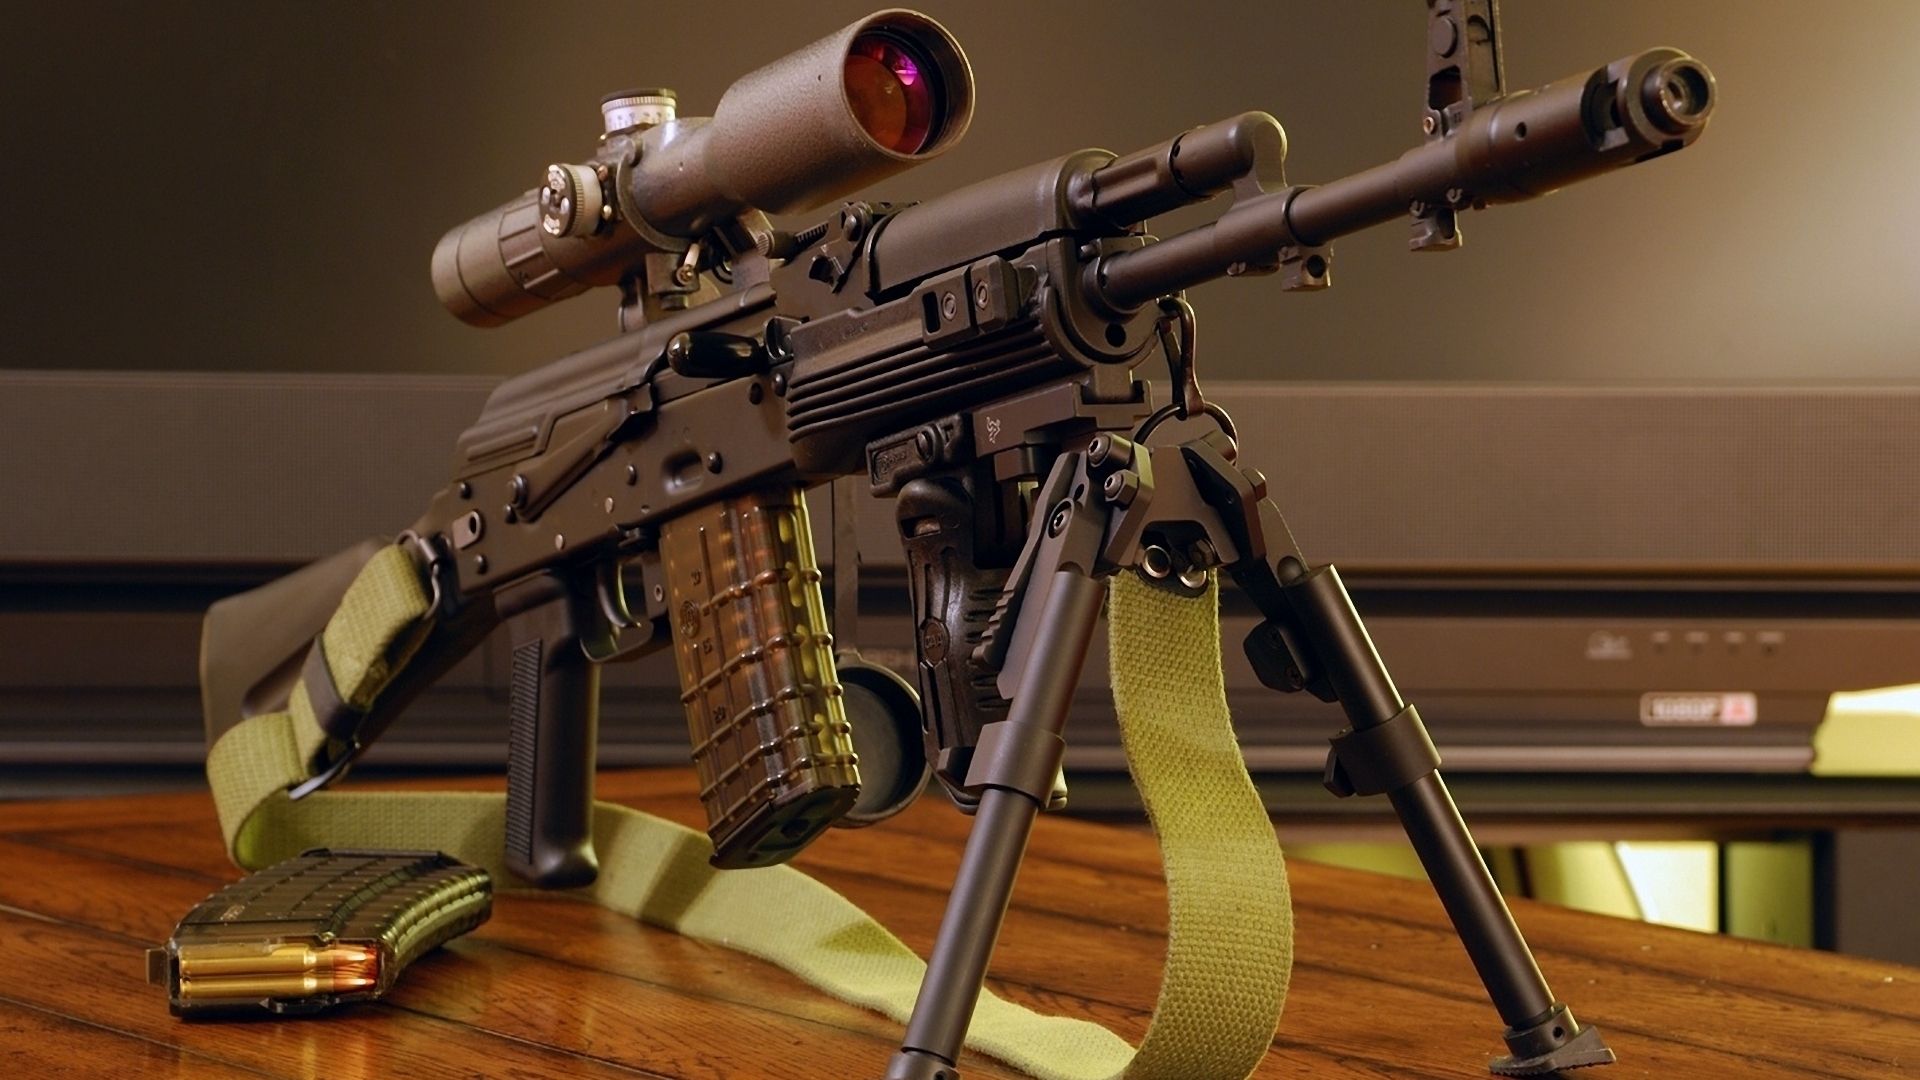 Automatic Gun AK-101 for 1920 x 1080 HDTV 1080p resolution